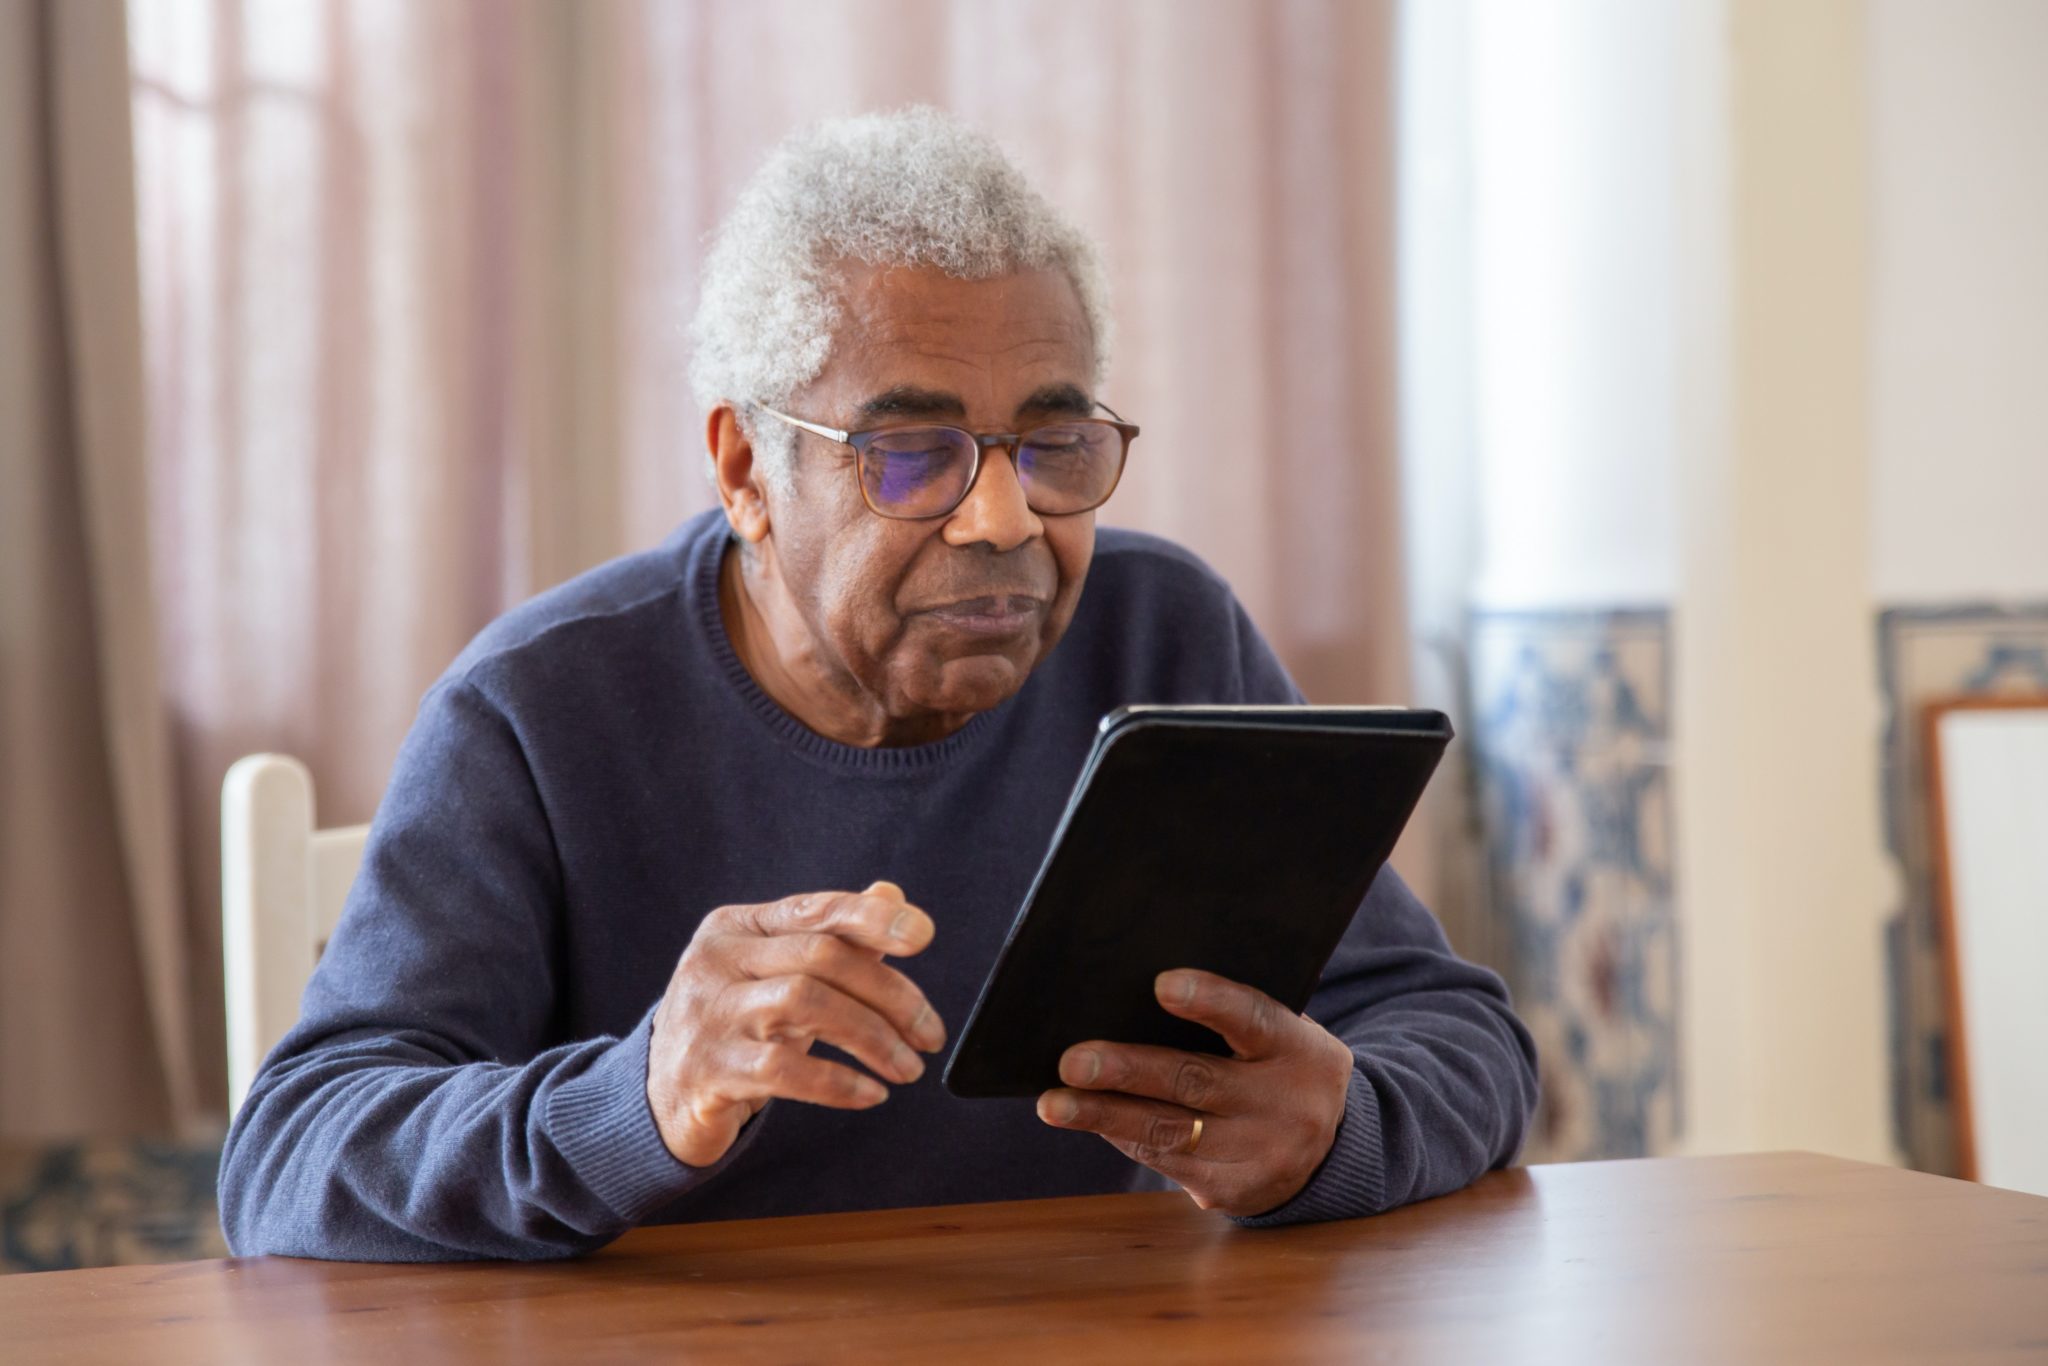 An elderly Black man in a blue sweater using a digital tablet